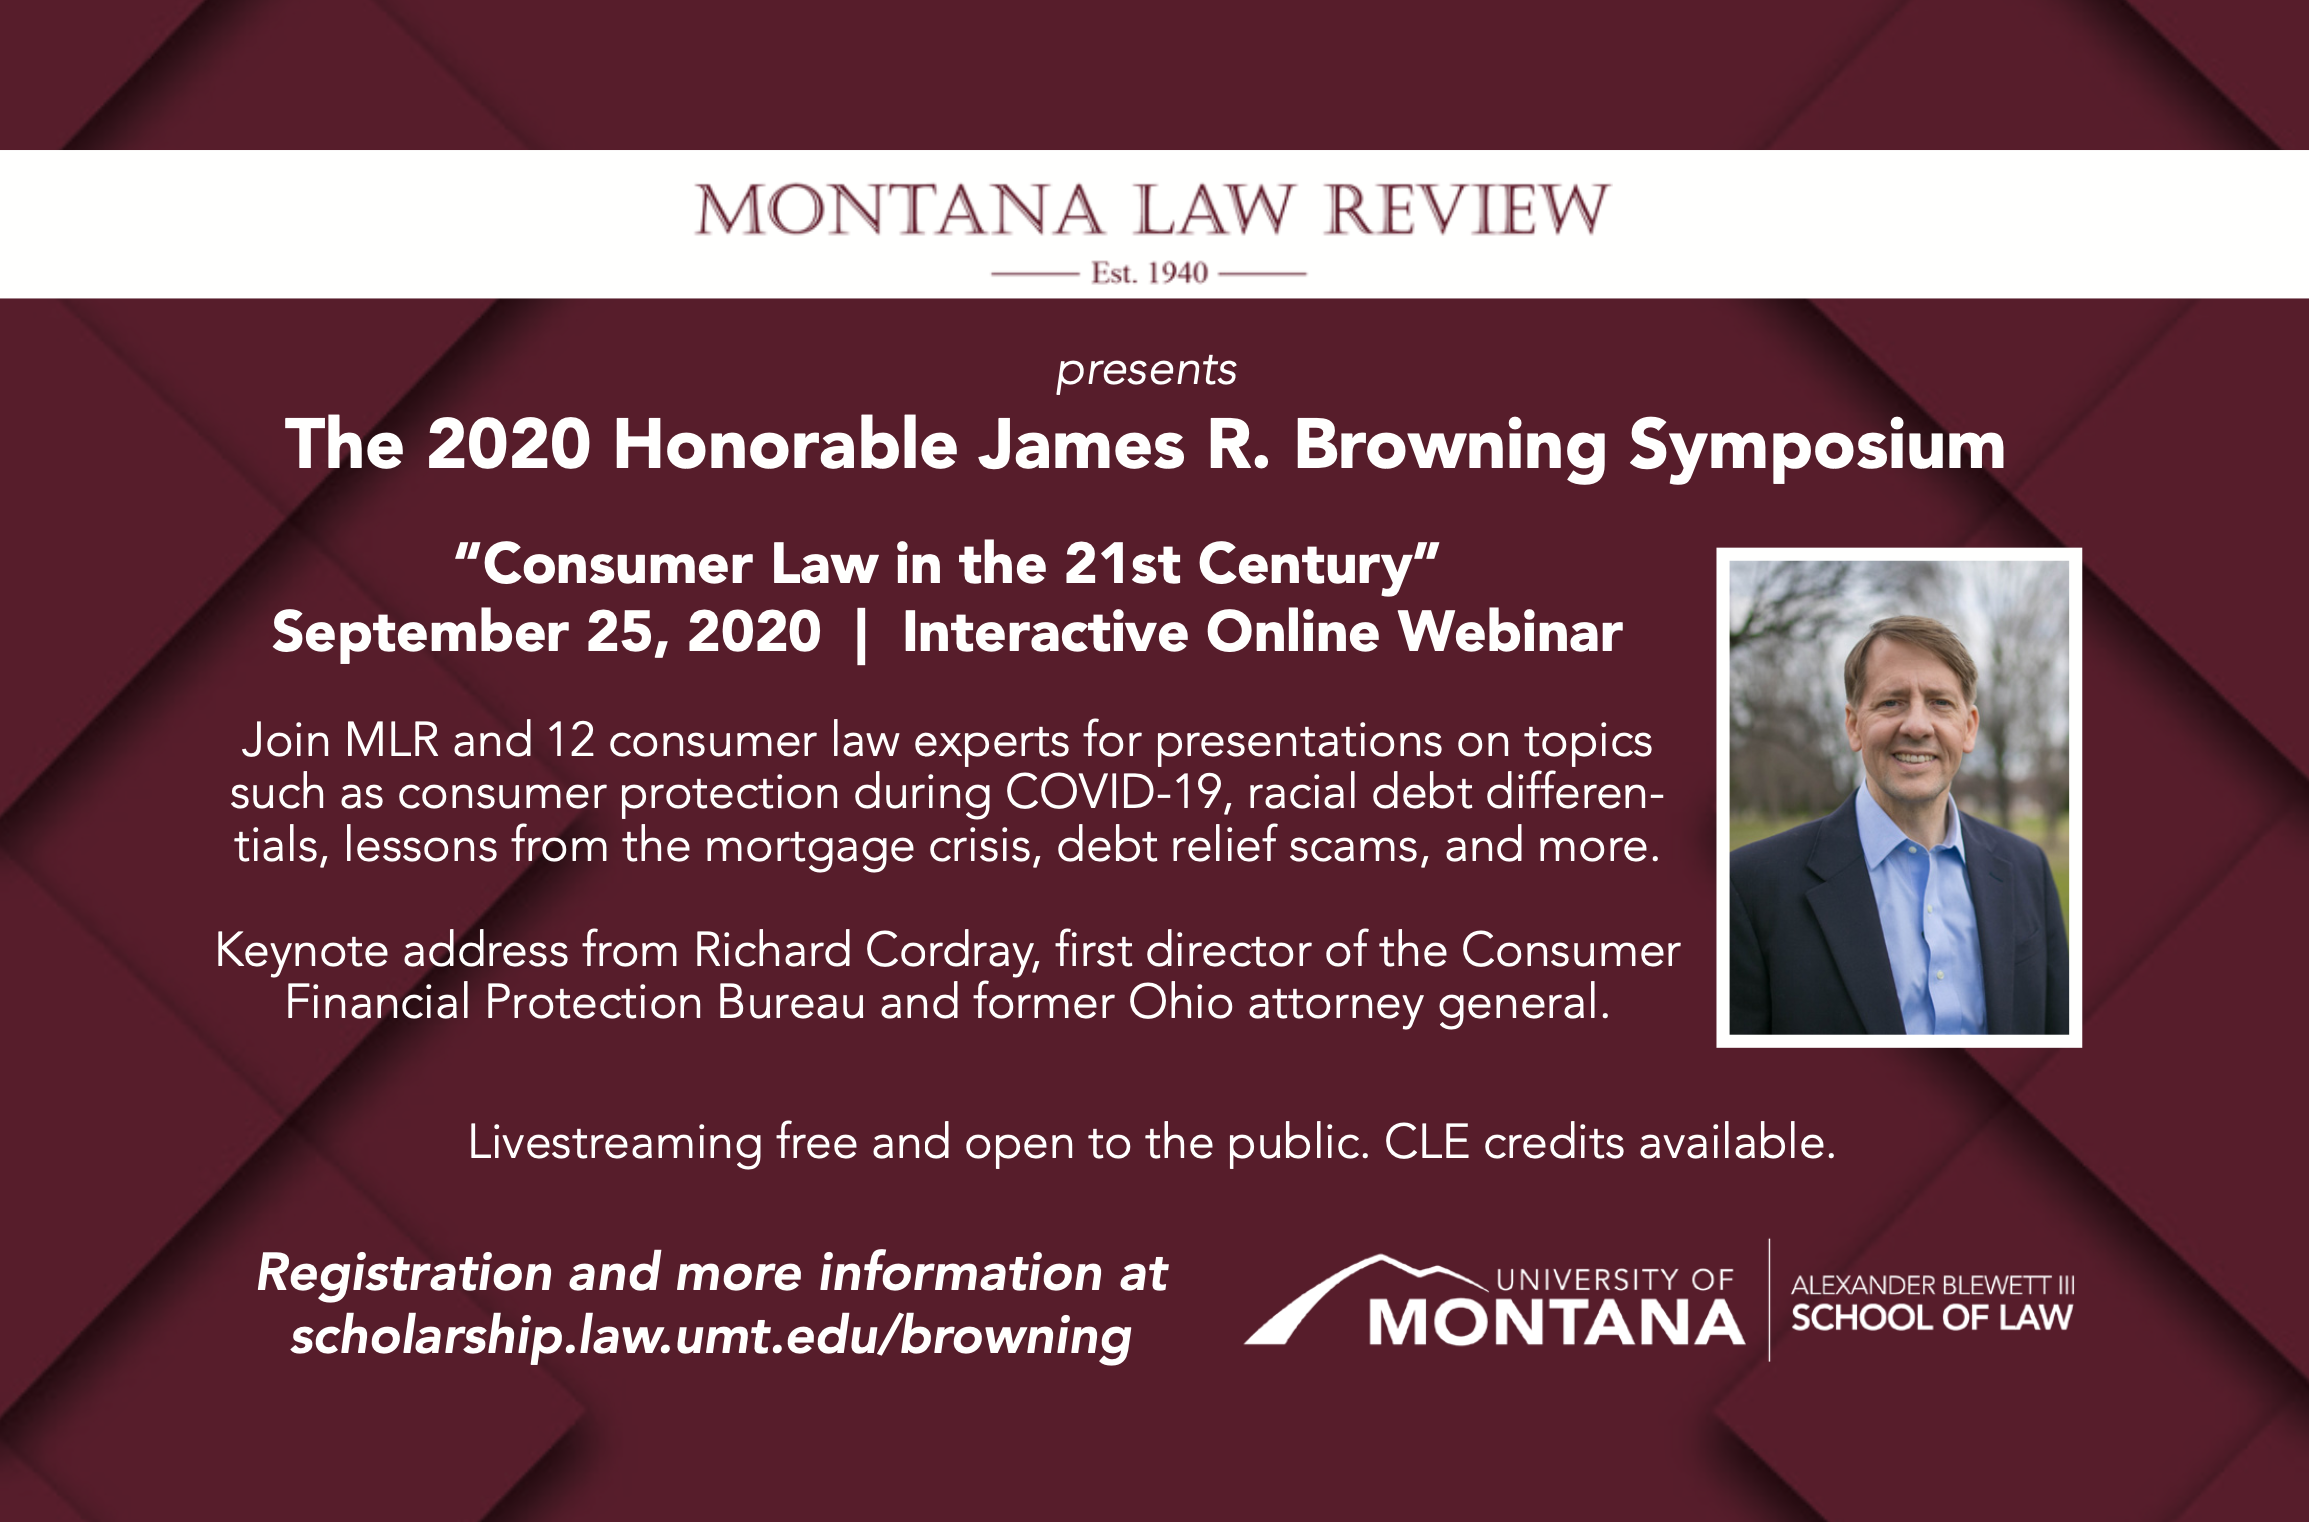 2020 Symposium on Consumer Law: 